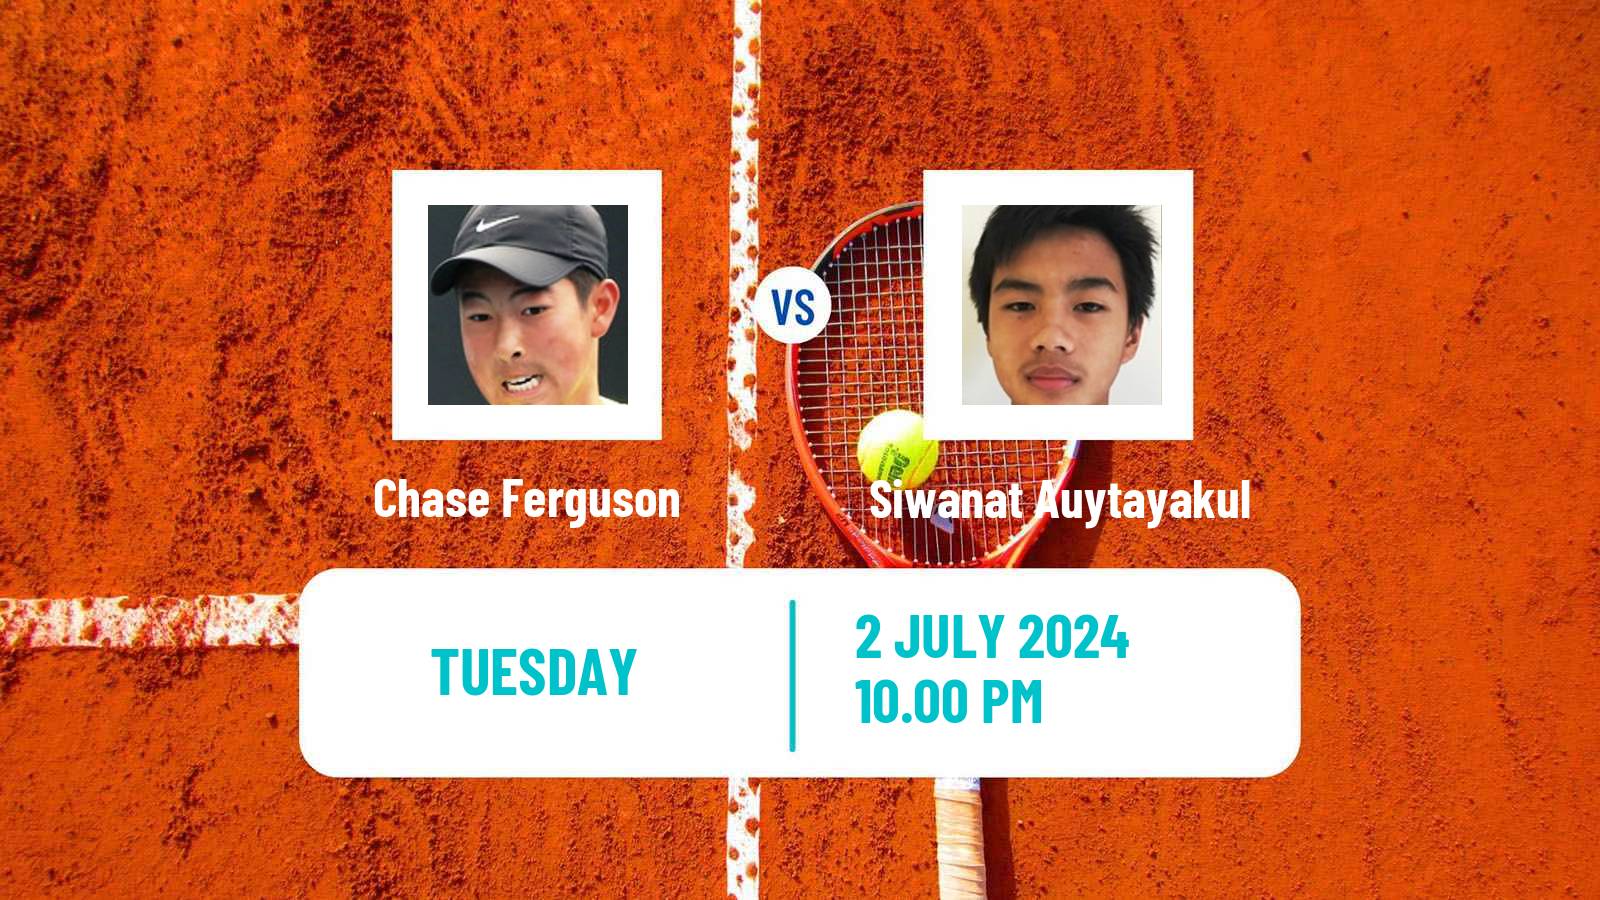 Tennis ITF M15 Nakhon Si Thammarat 4 Men Chase Ferguson - Siwanat Auytayakul